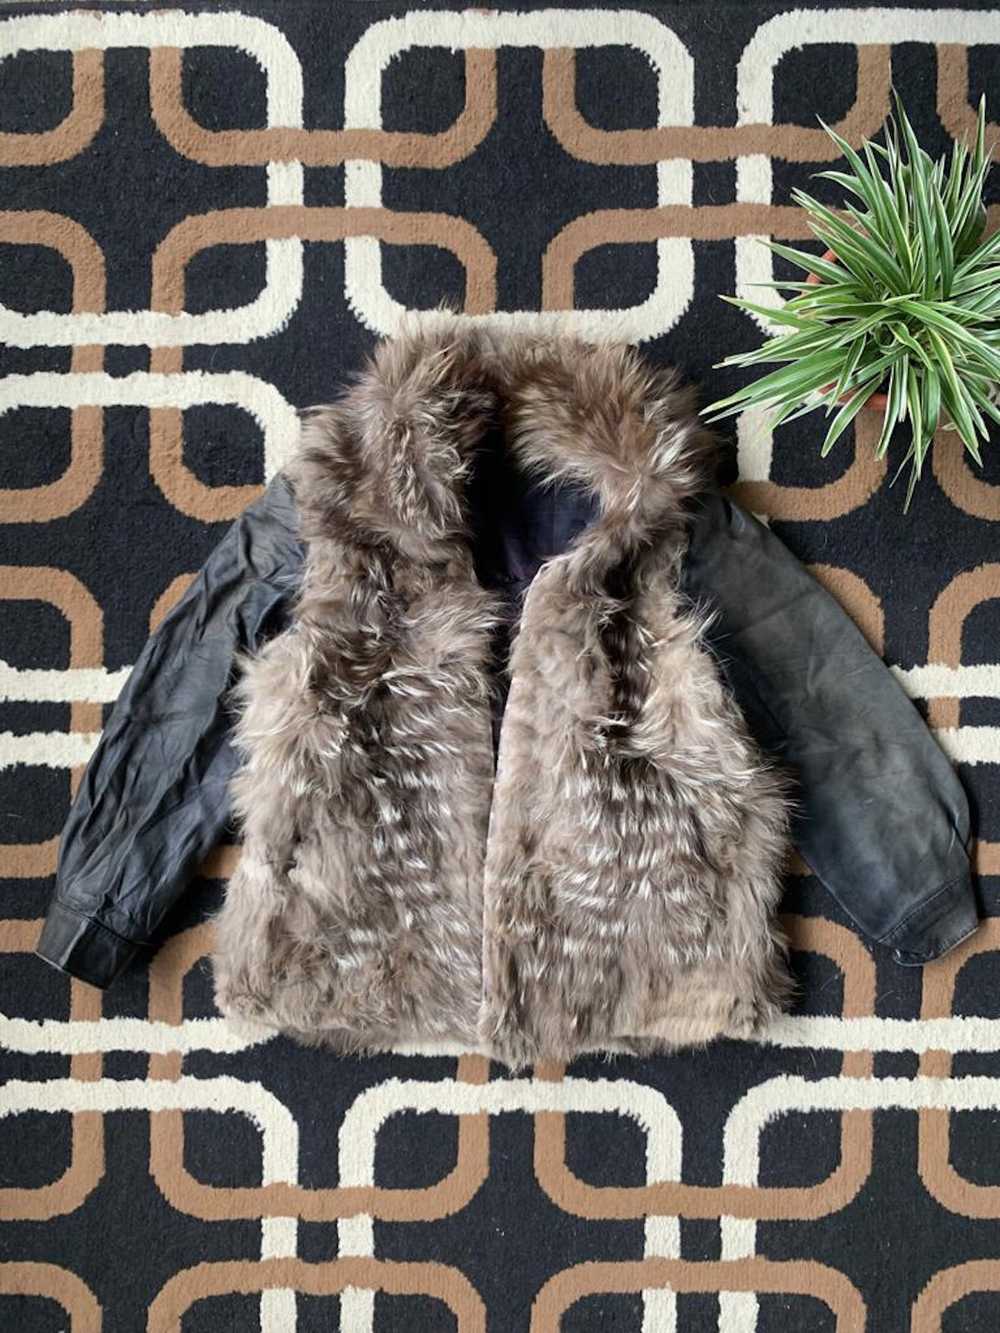 Avant Garde × Japanese Brand × Mink Fur Coat Vint… - image 1